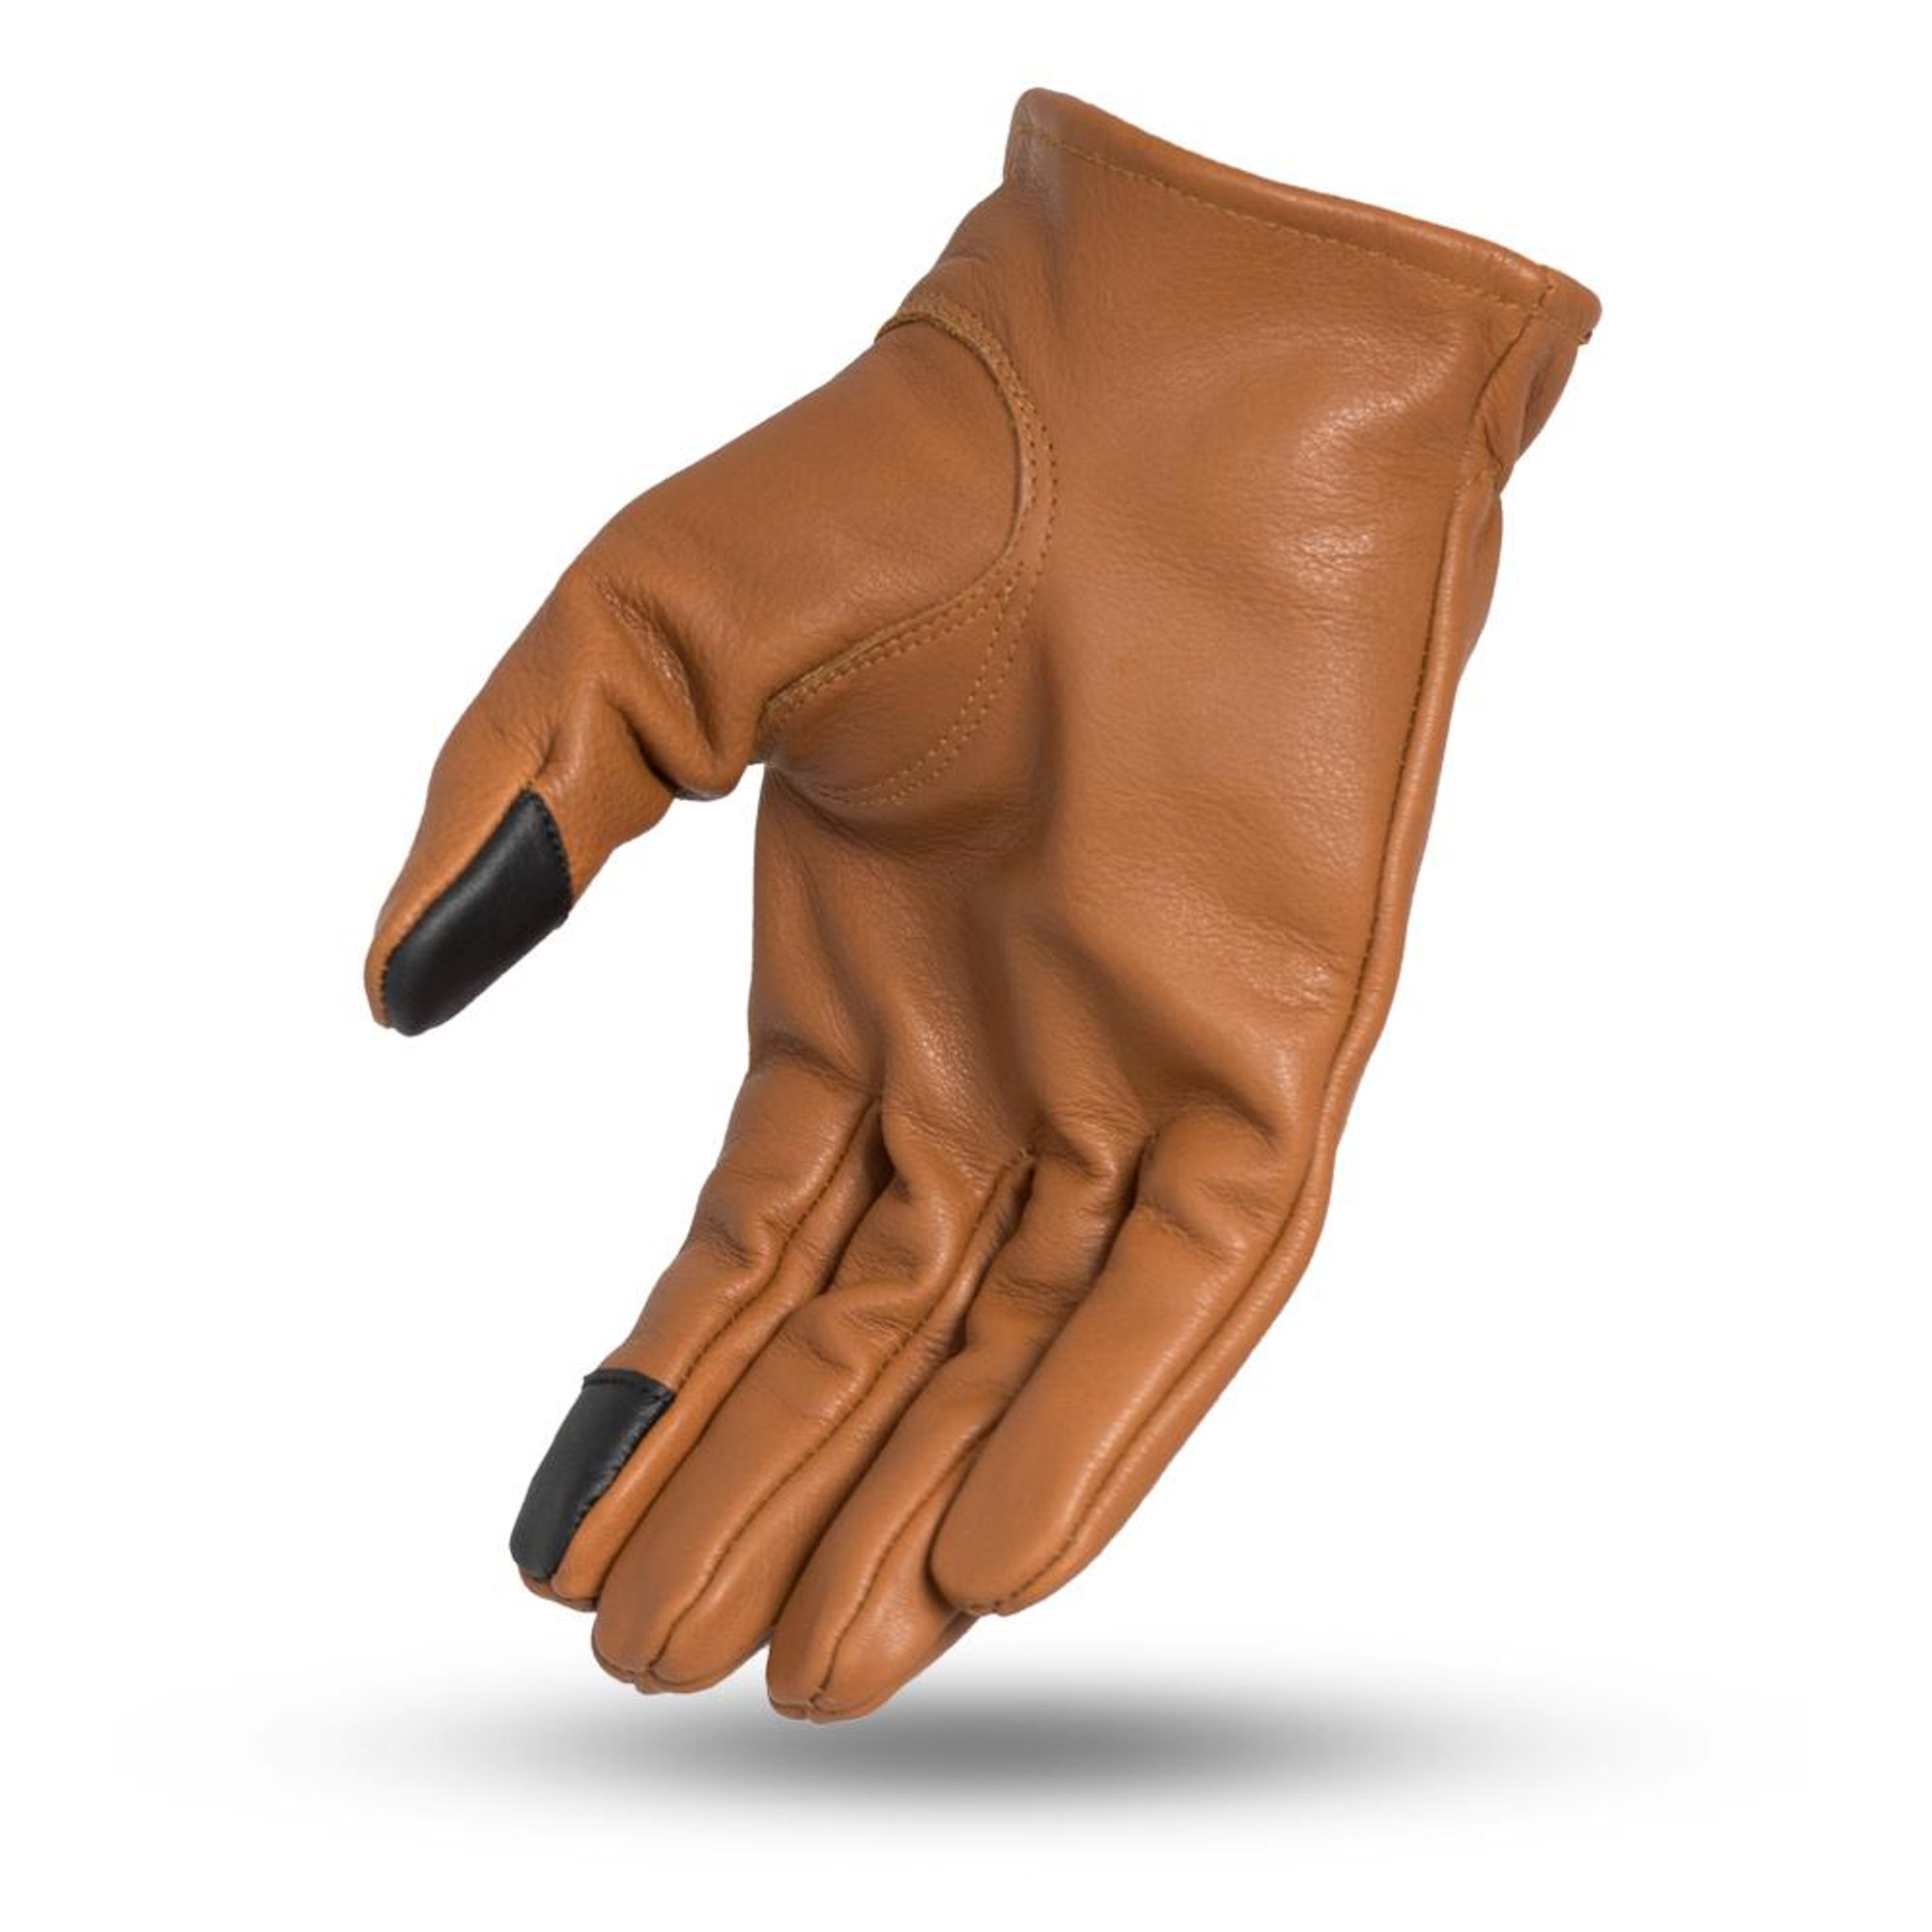 Roper Distressed Brown/Black w/ Strap - Leather Gloves